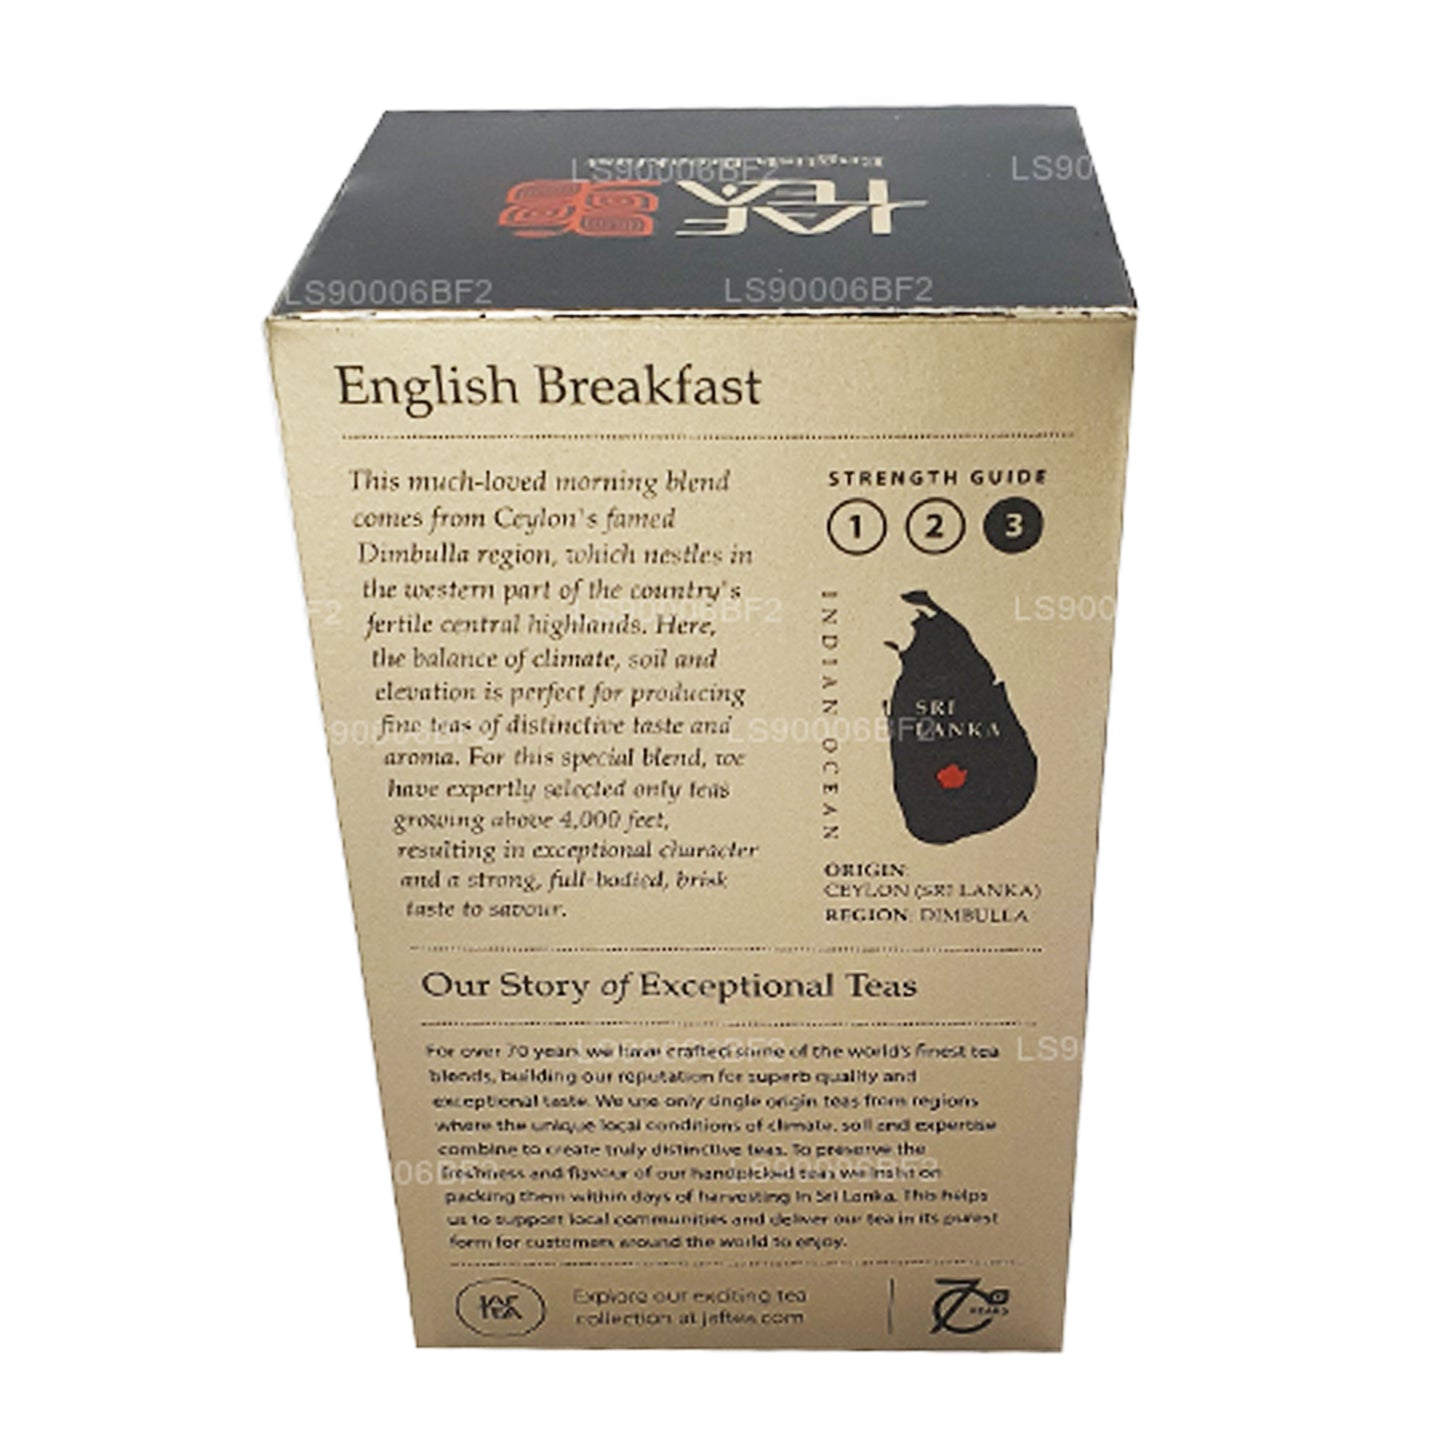 Jaf Tea engelsk frukost (40g) 20 tepåsar